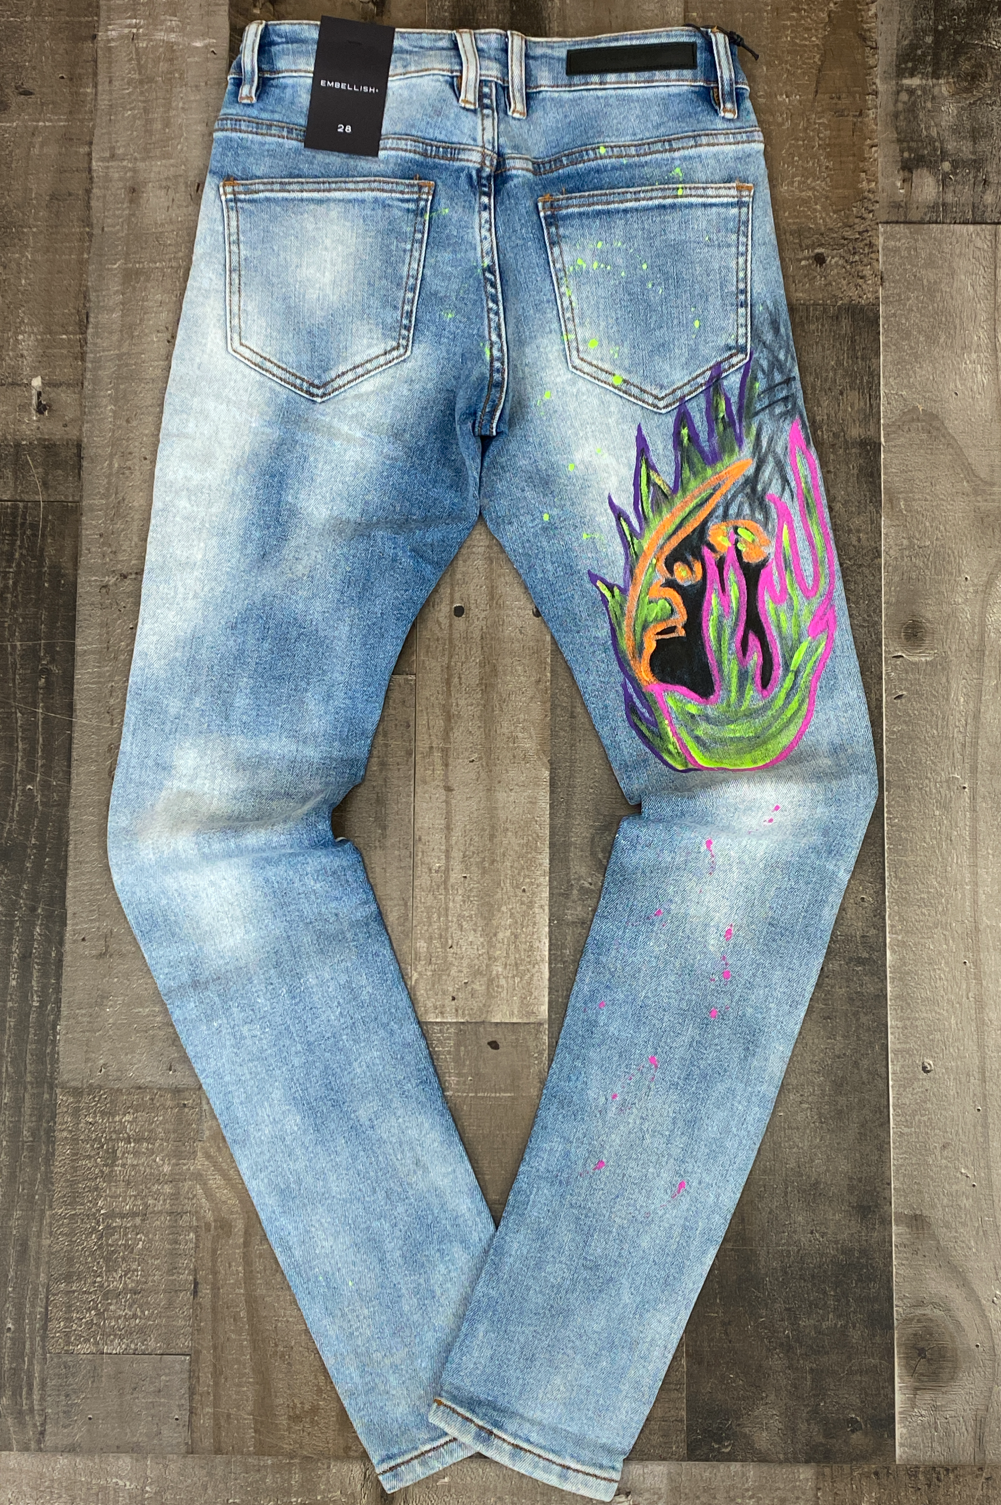 
                  
                    Embellish- Devey standard blue jeans
                  
                